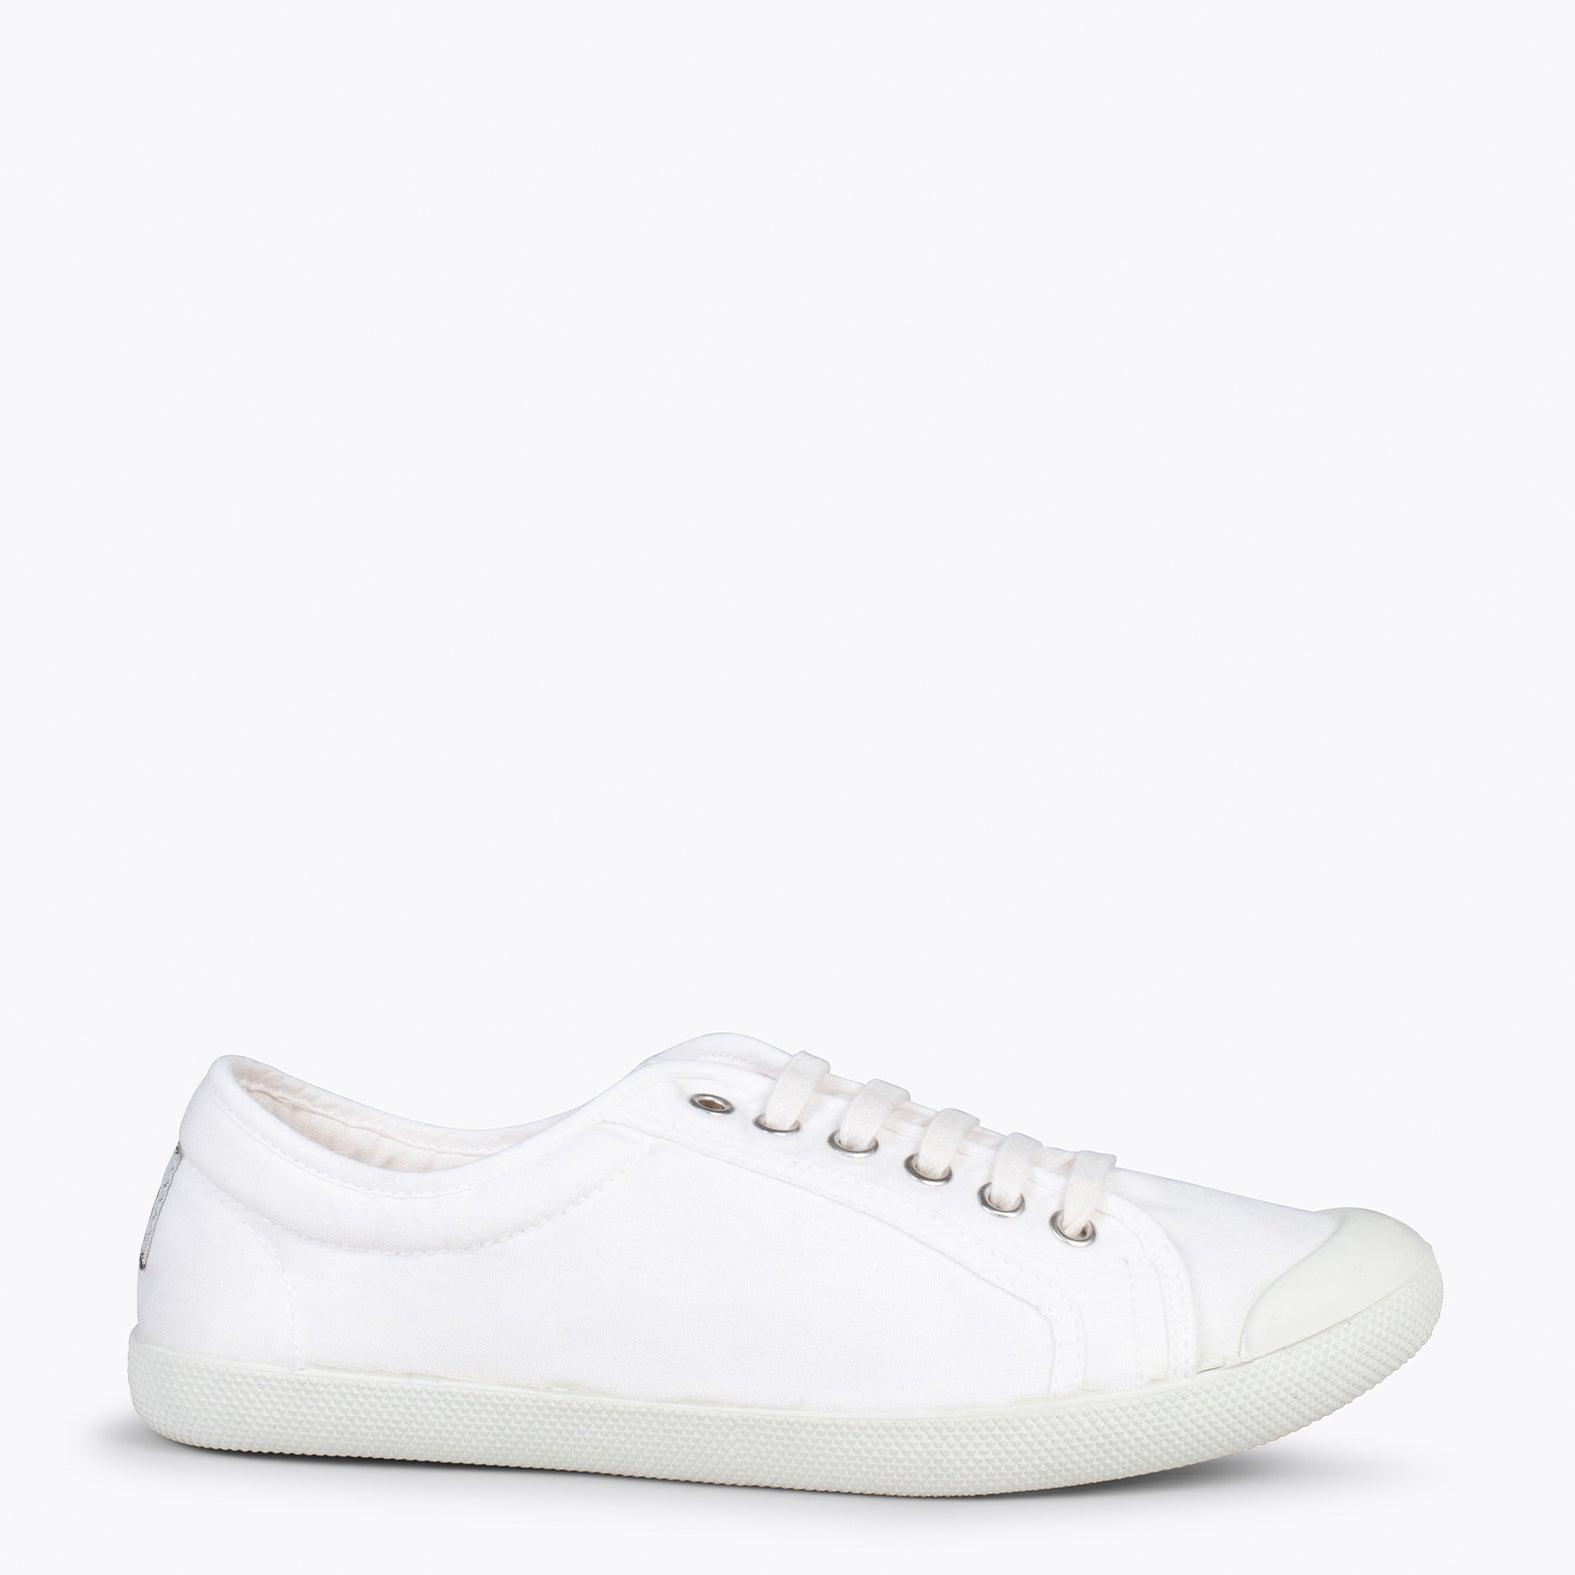 BAOBAB – WHITE BCI cotton sneakers from IO&GO